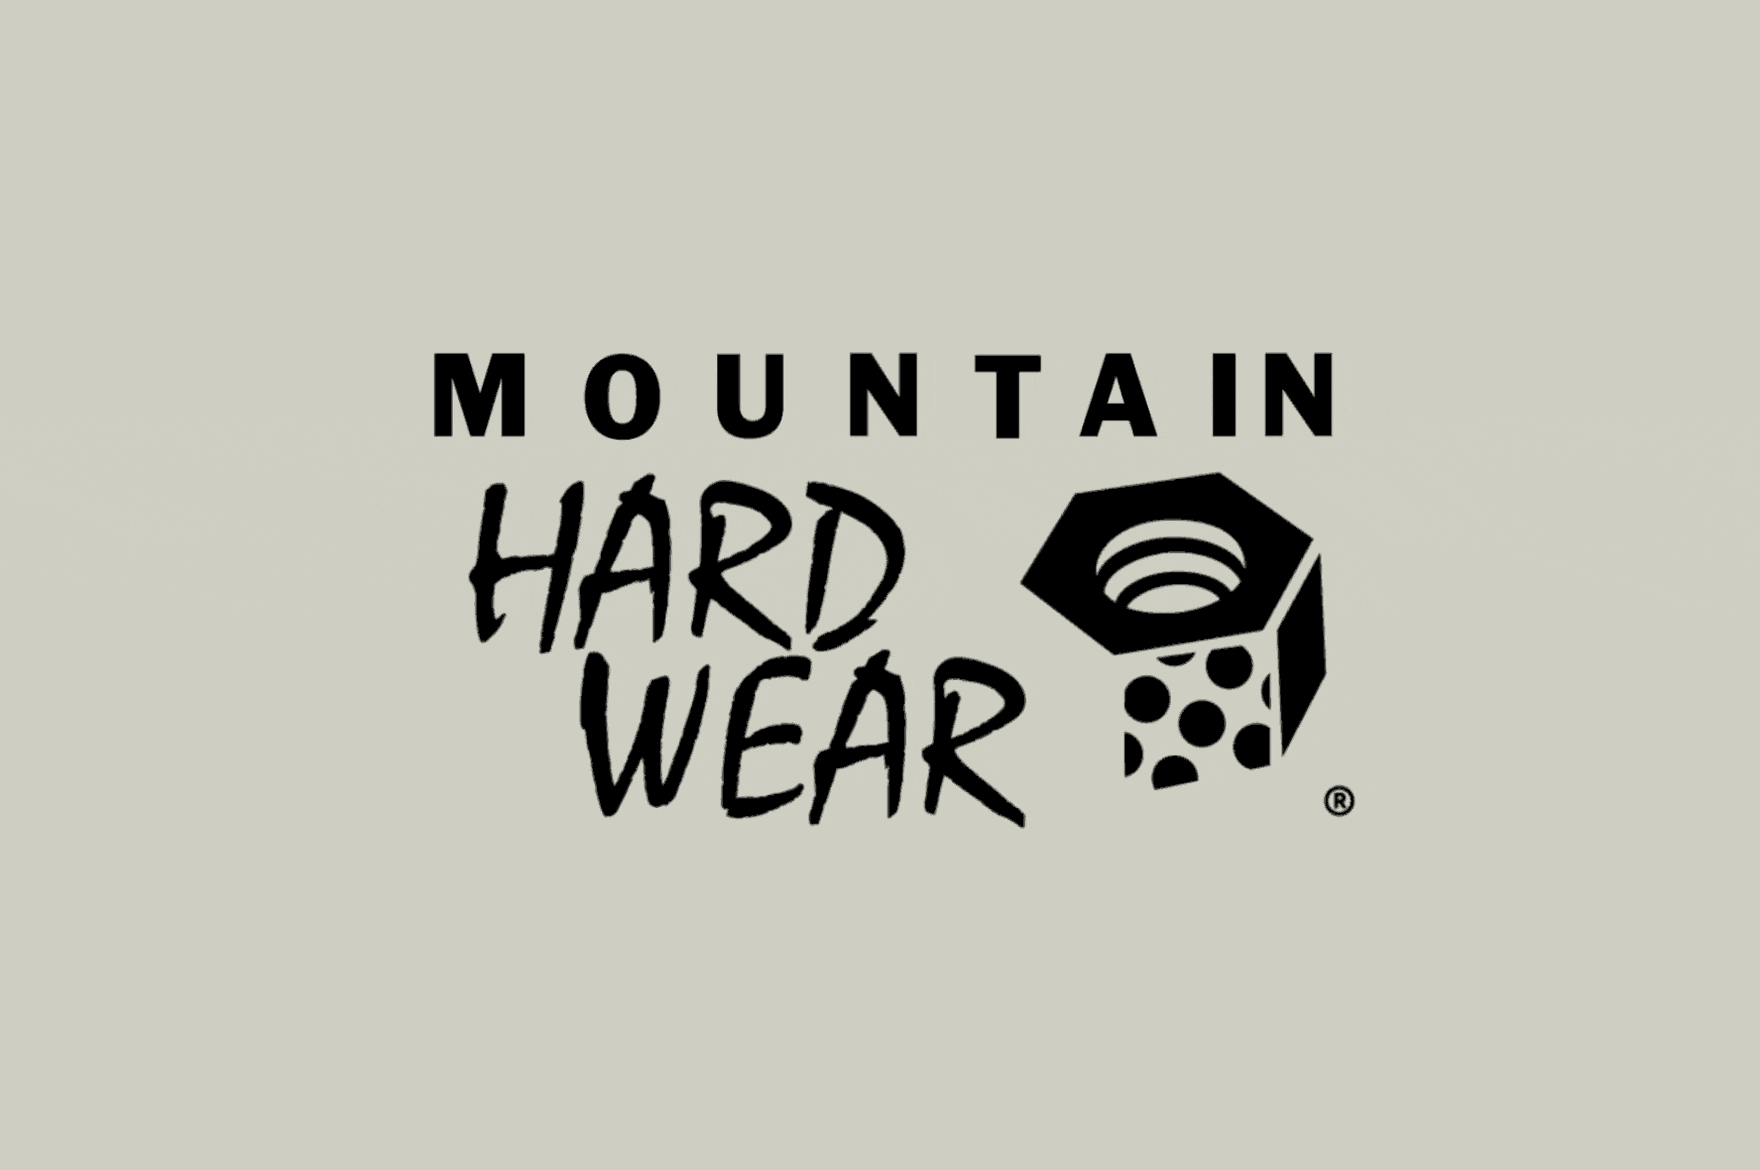 Mountain Wear Logo - Mountain Hardwear Logo Redesign - Solidarity of Unbridled Labour